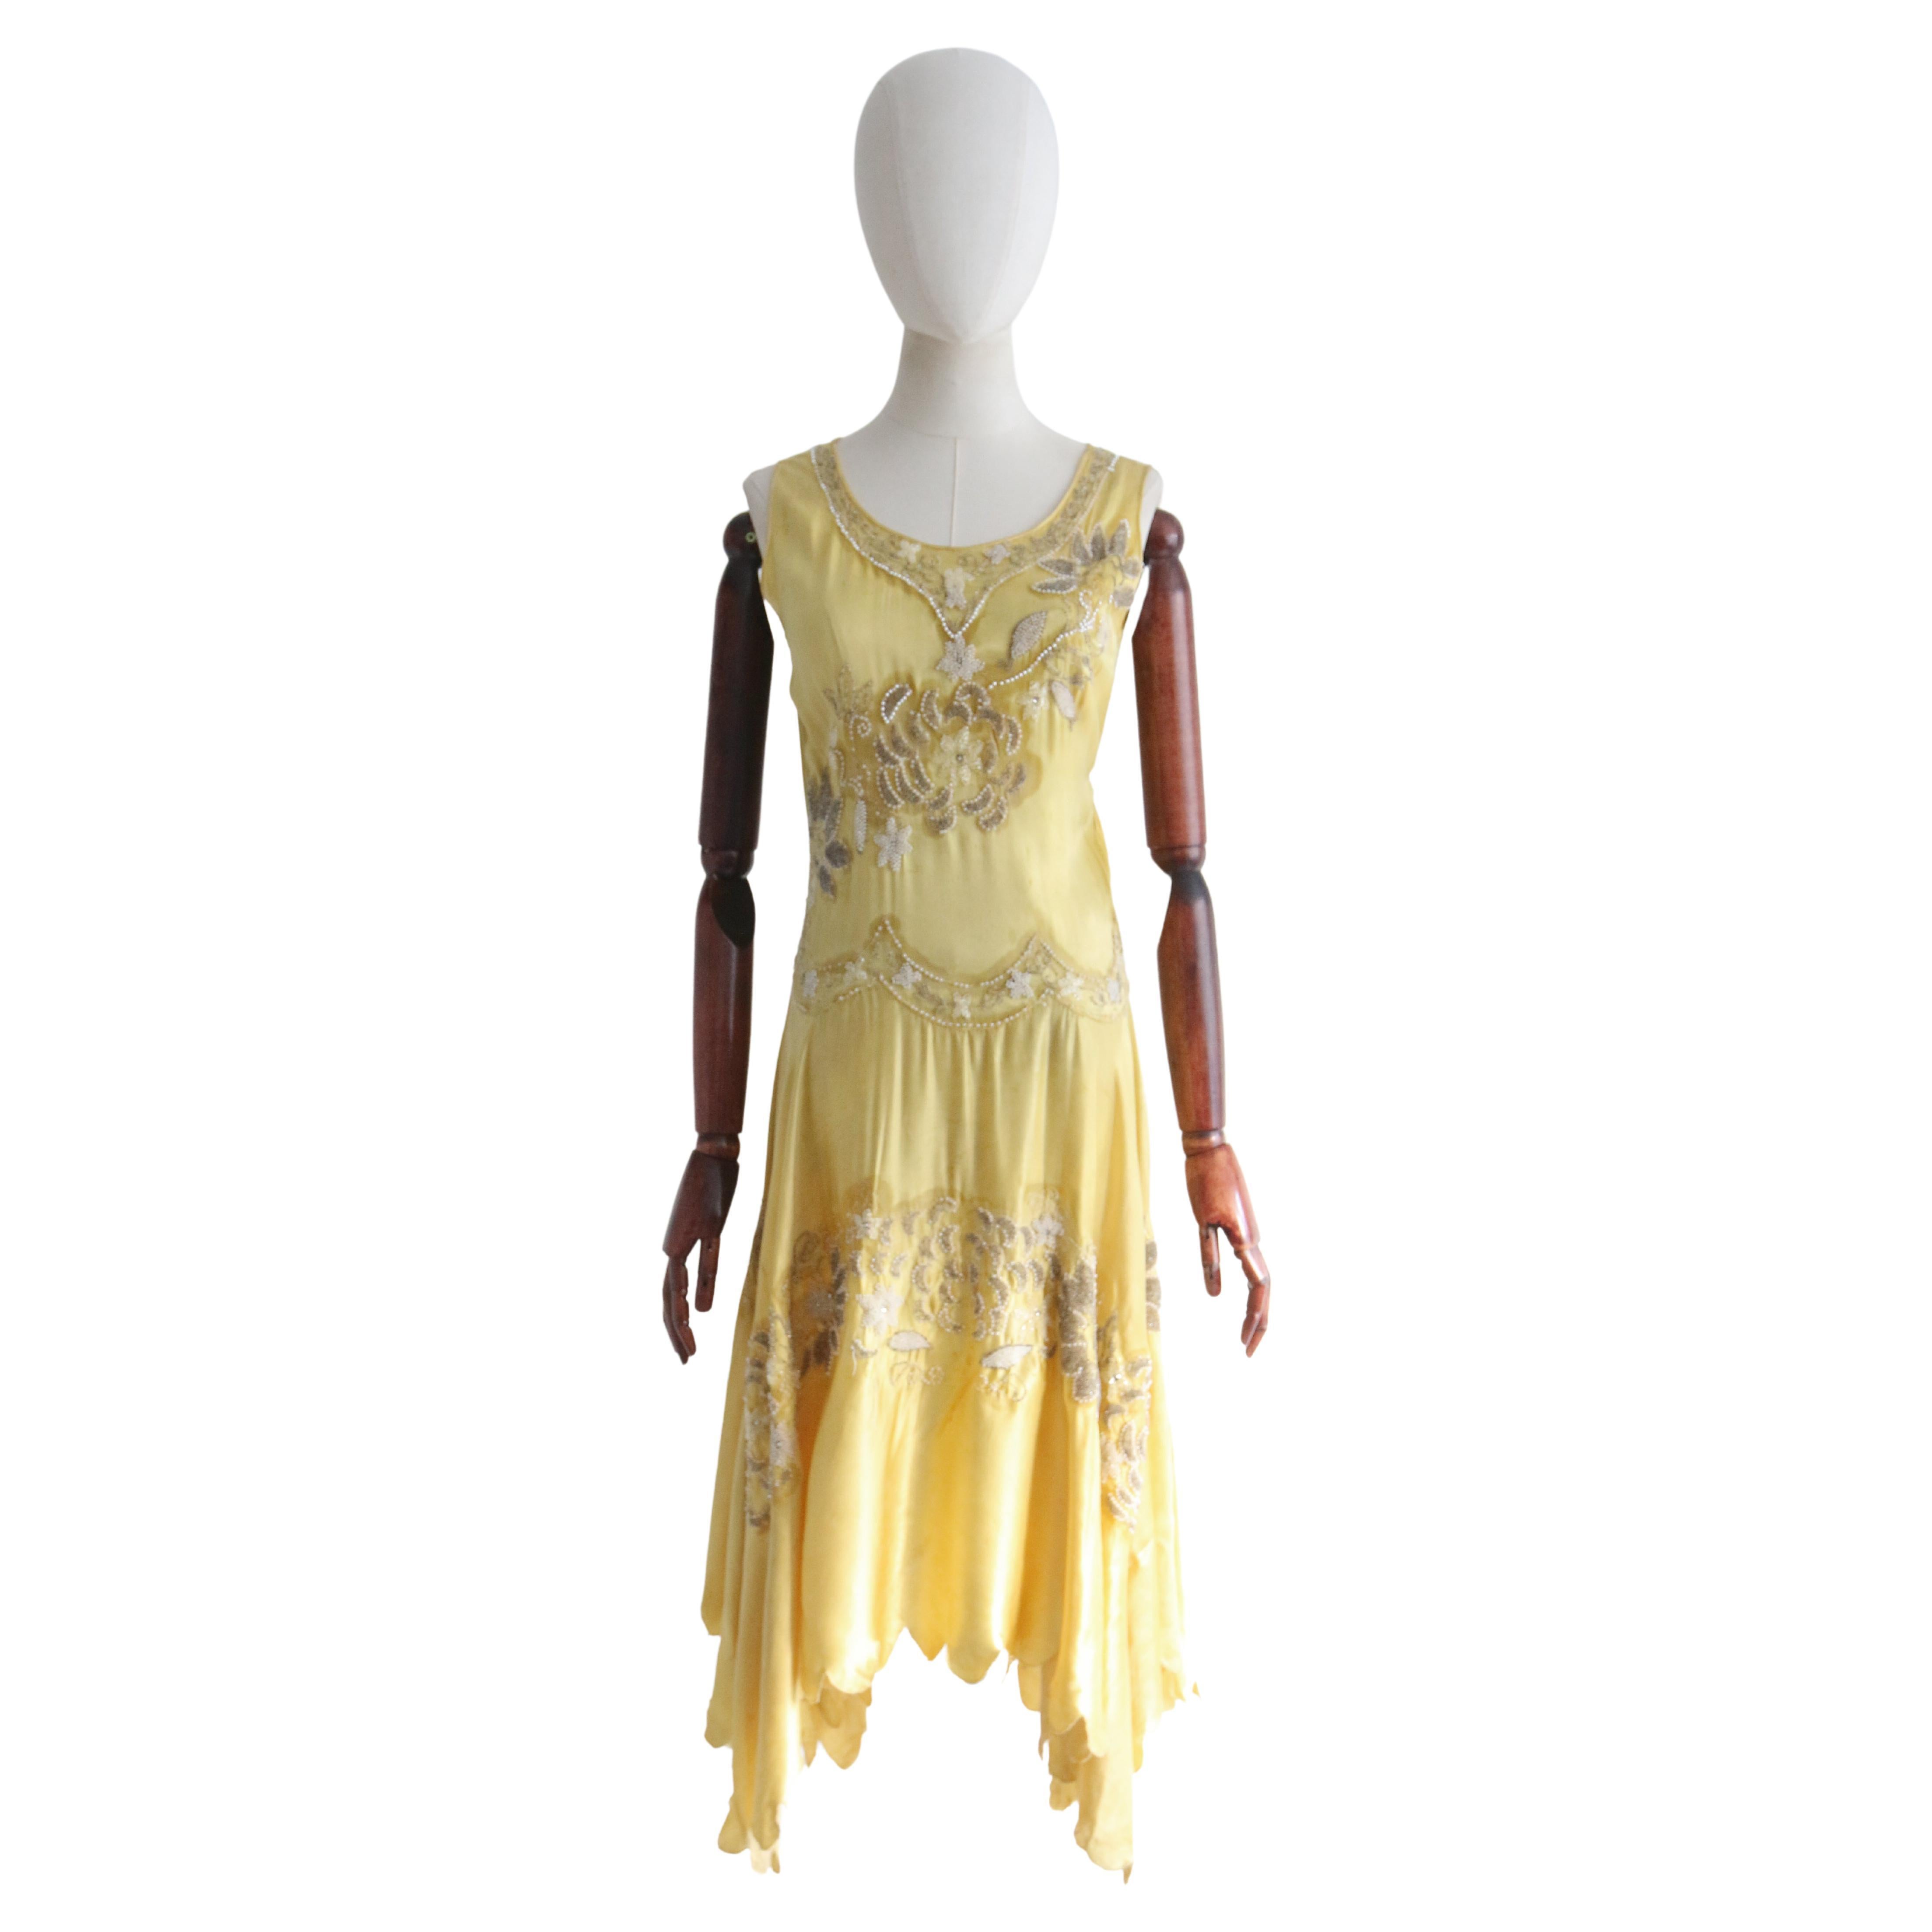 Vintage 1920's Yellow Silk Beaded Dress UK 6-8 US 2-4